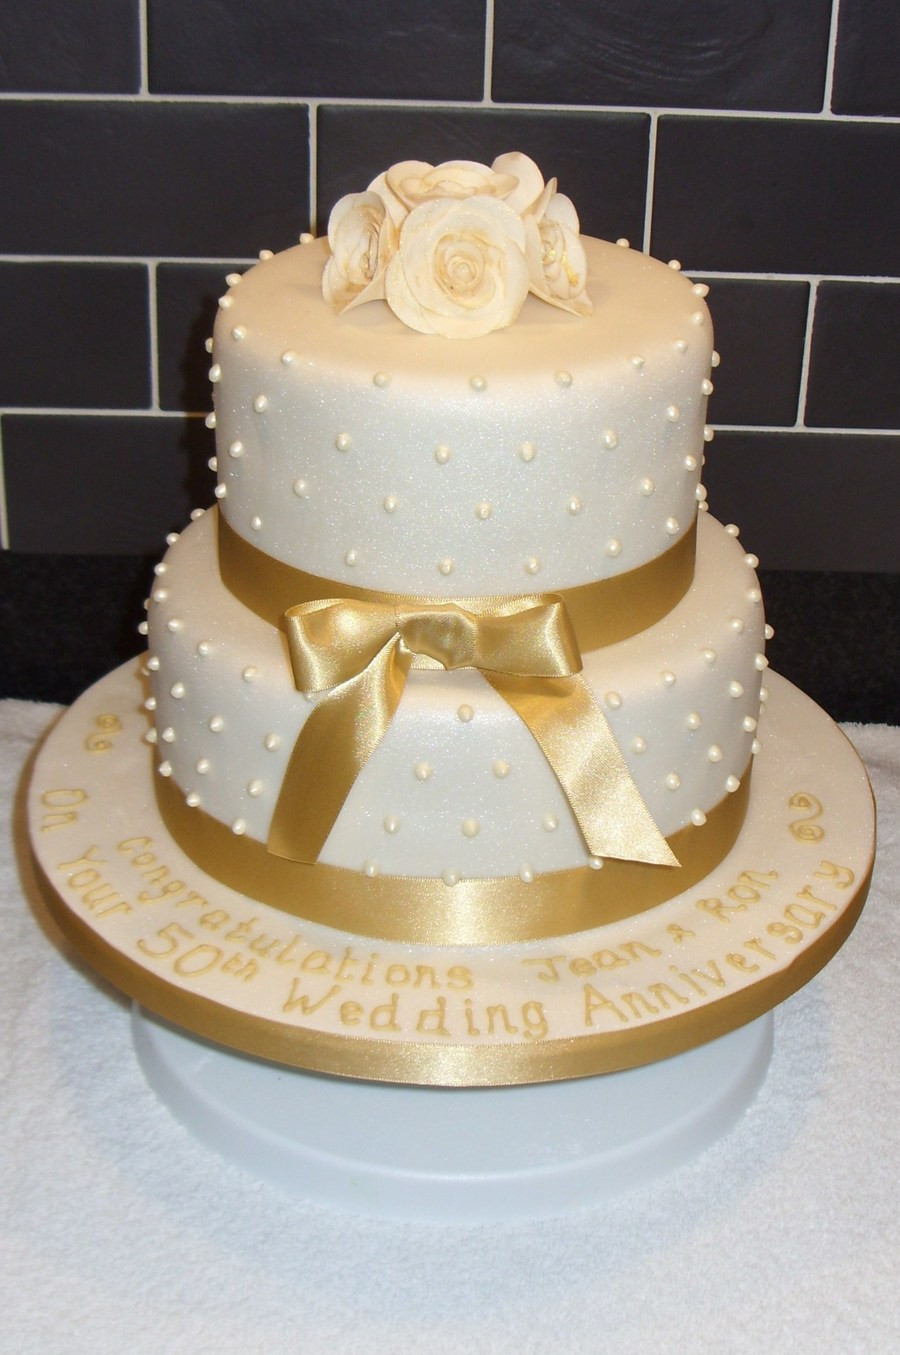 Golden Wedding Anniversary Cakes
 Golden Wedding Anniversary Cake CakeCentral